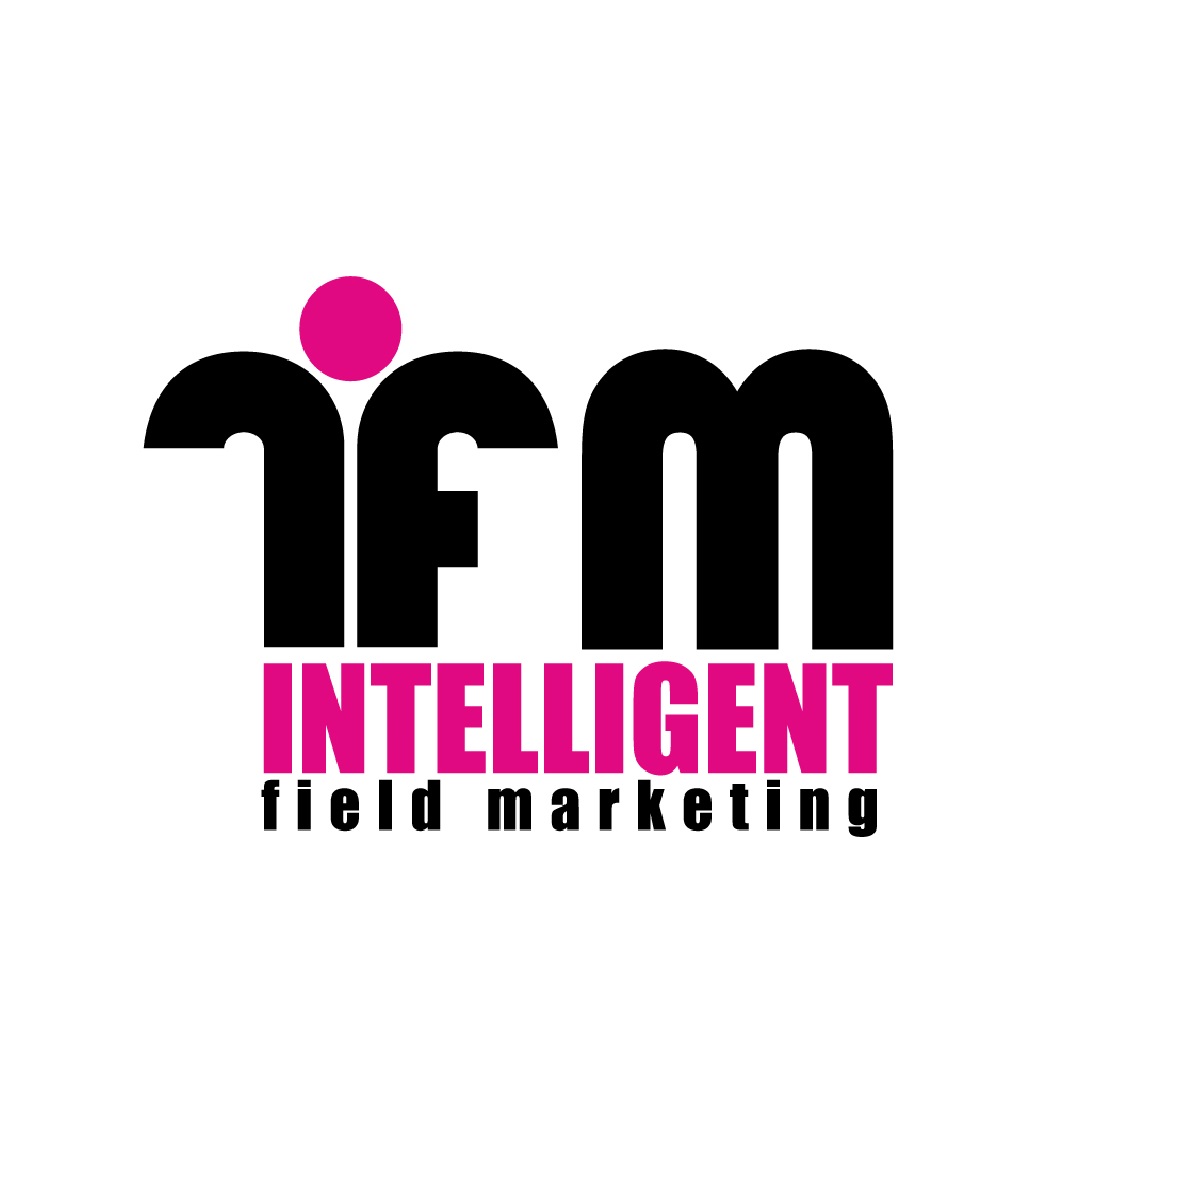 IFM company